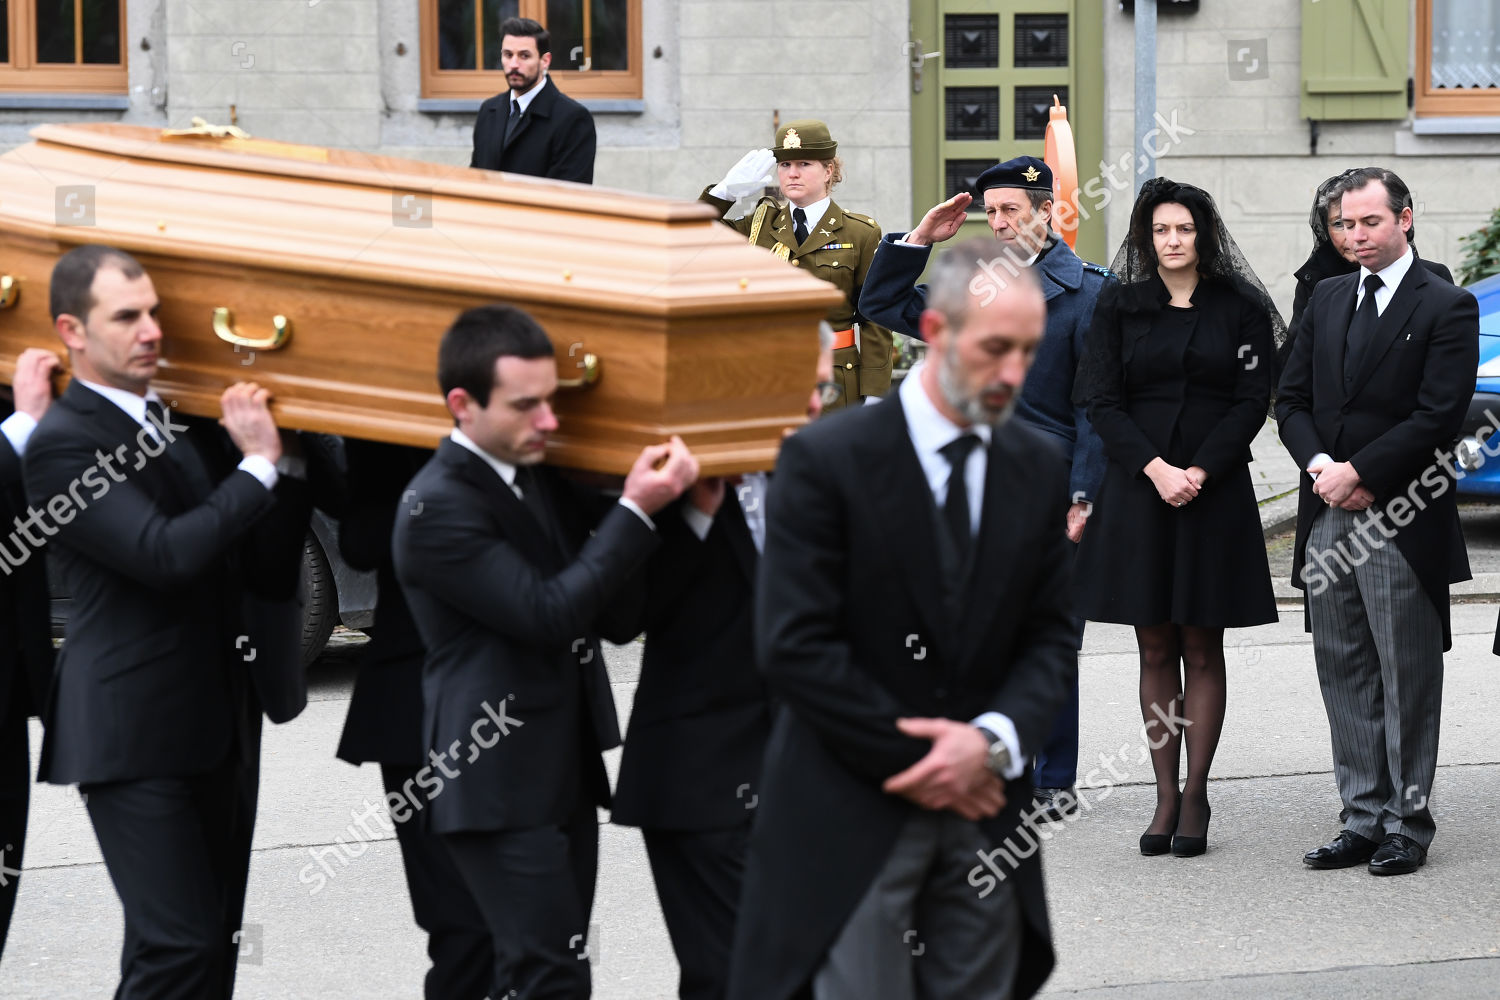 funeral-of-philippe-de-lannoy-anvaing-belgium-shutterstock-editorial-10063926l.jpg